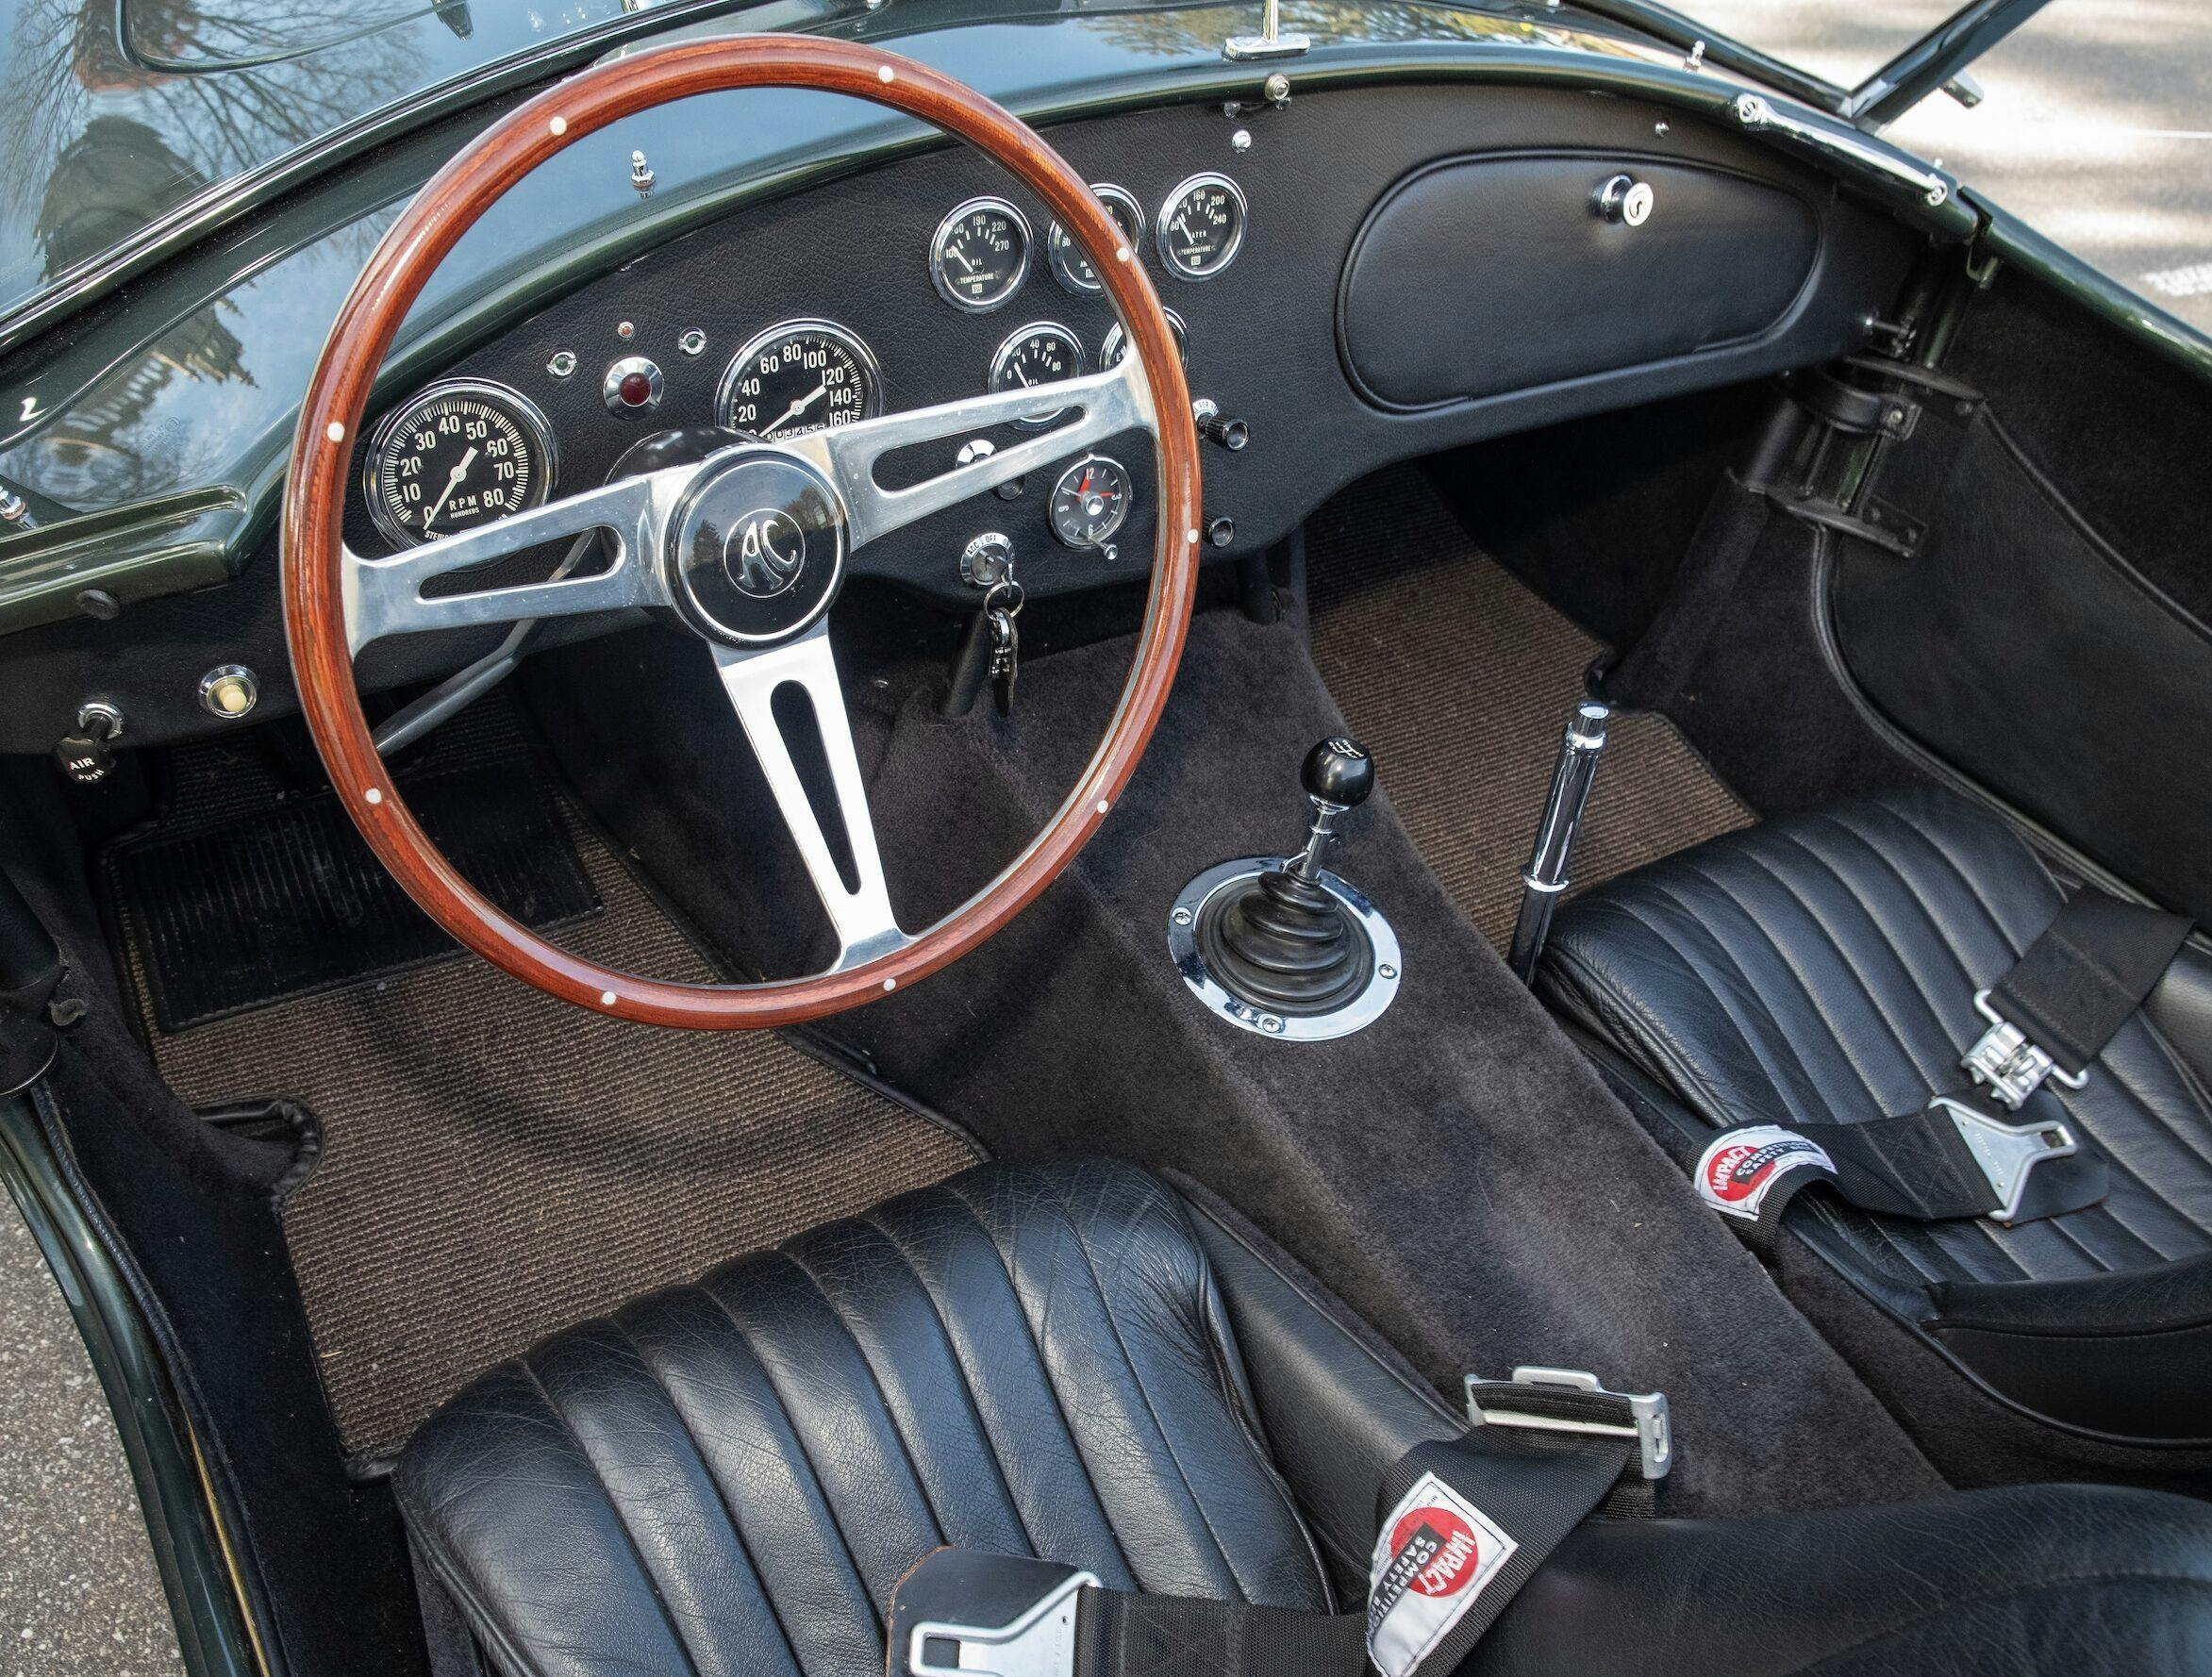 1964 Shelby Cobra interior full